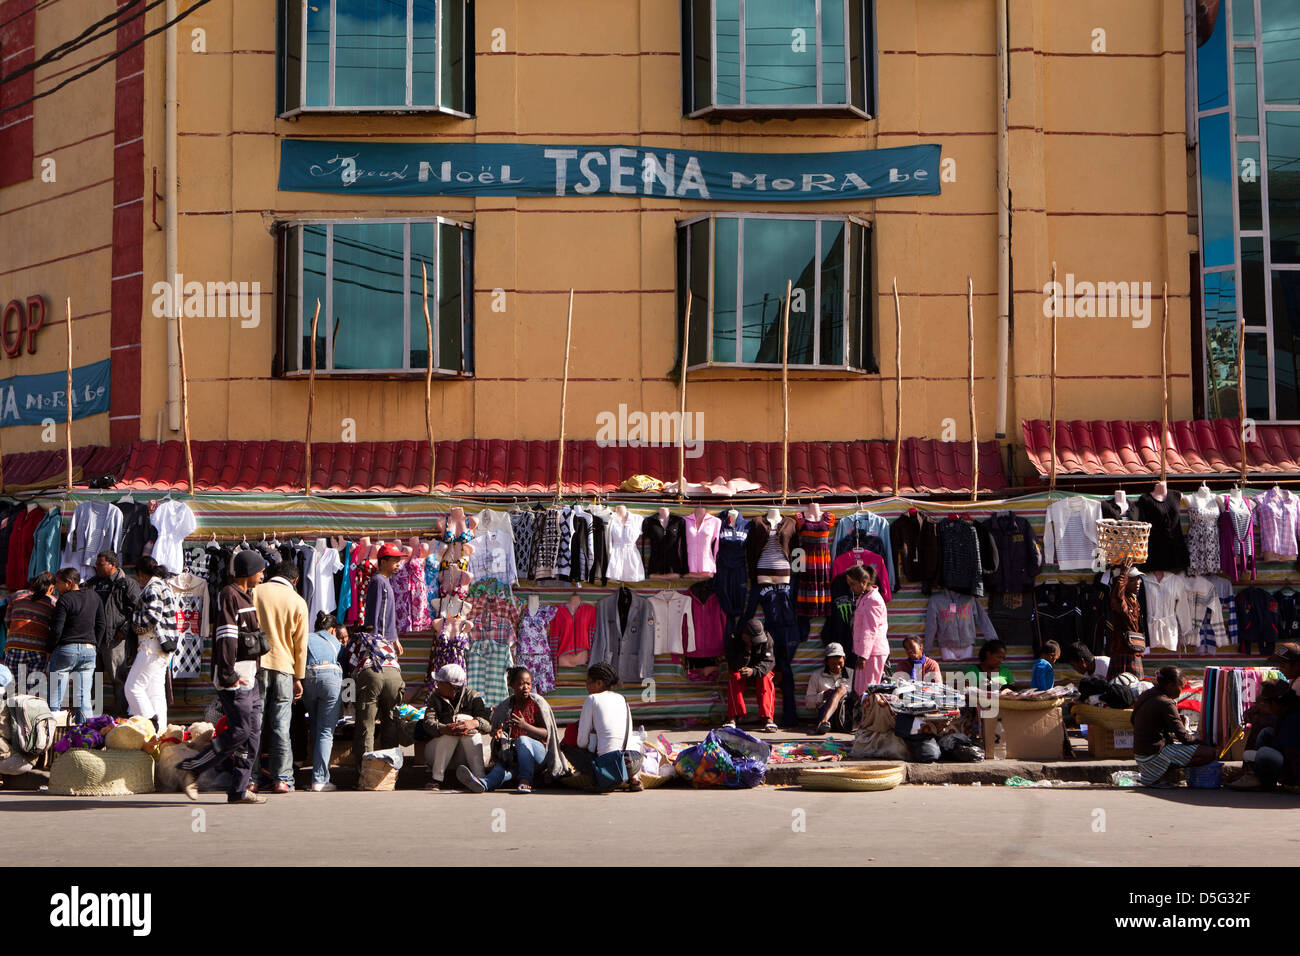 Madagascar, Antananarivo, roadside market stalls selling clothes Stock Photo